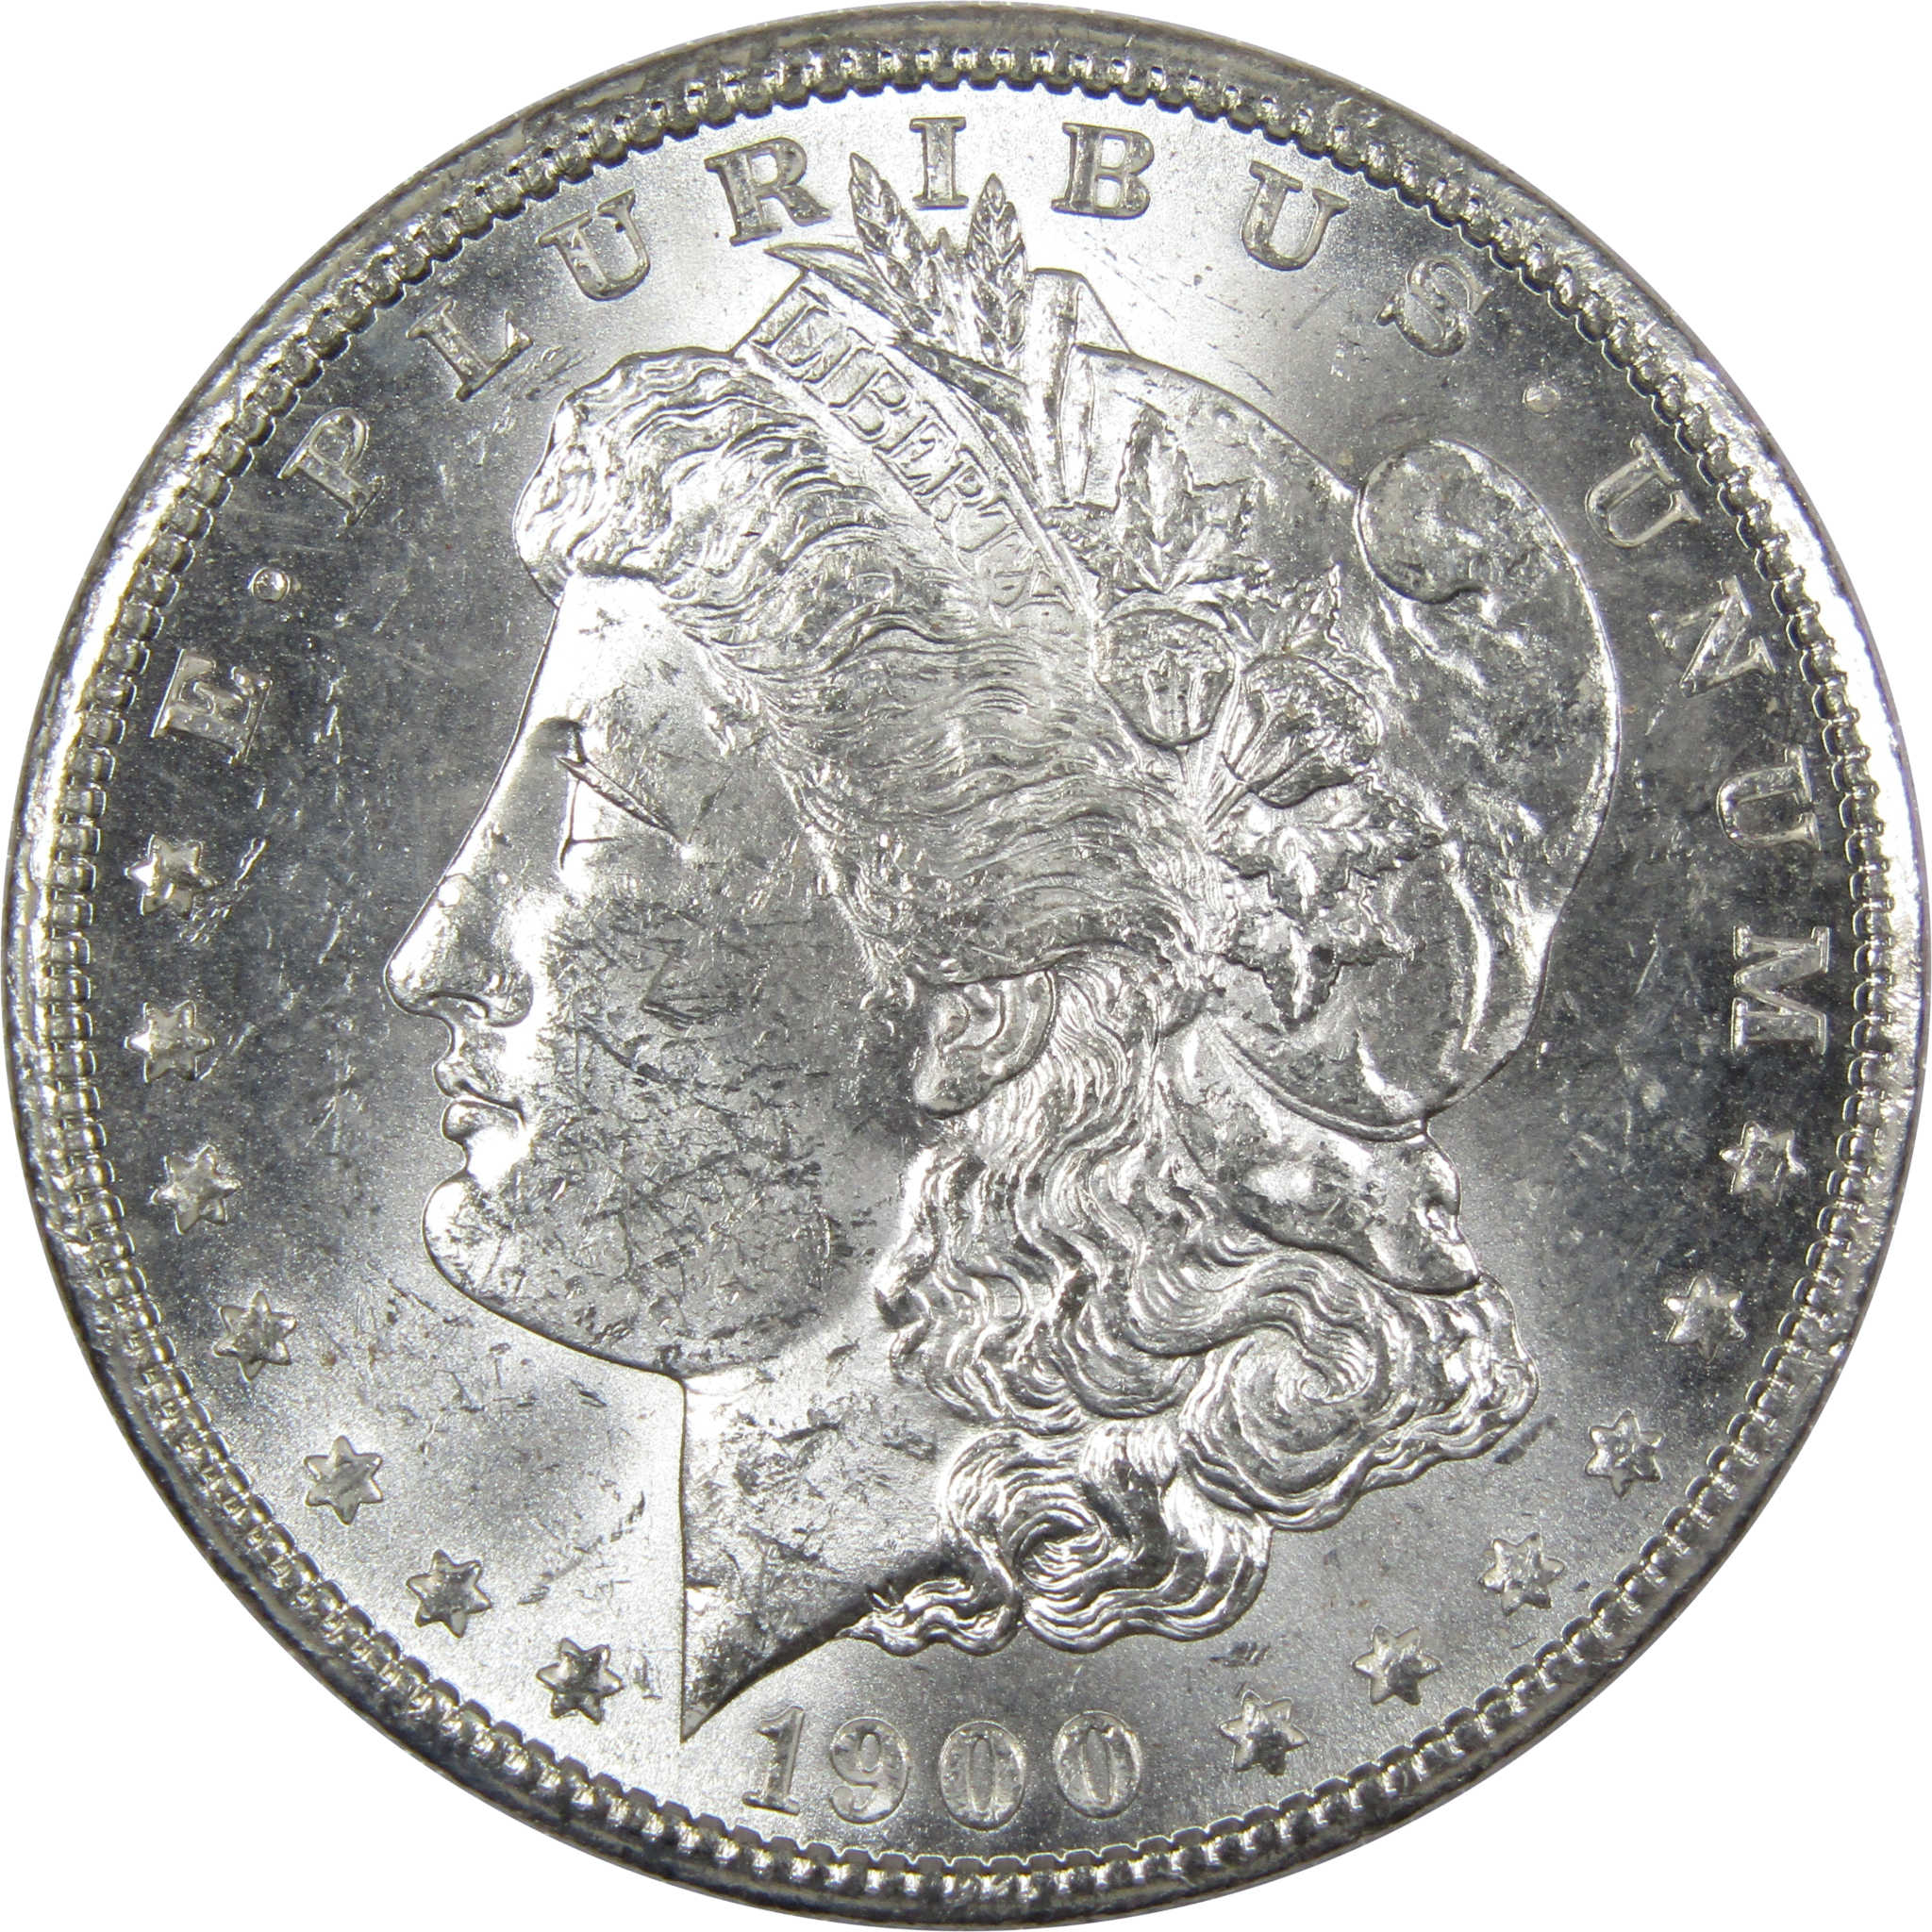 1900 O Morgan Dollar BU Uncirculated Mint State 90% Silver SKU:IPC9737 - Morgan coin - Morgan silver dollar - Morgan silver dollar for sale - Profile Coins &amp; Collectibles